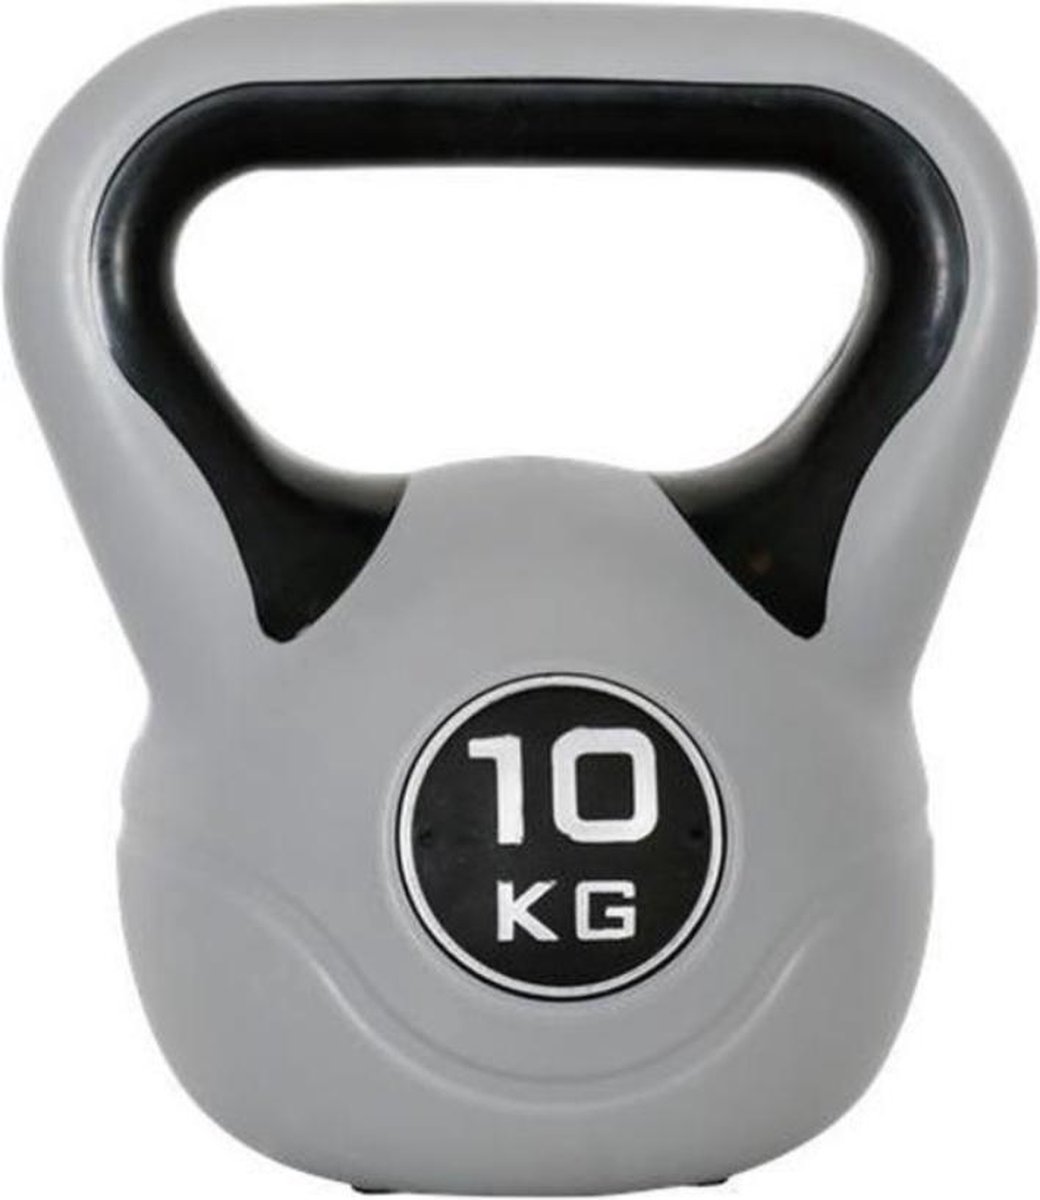 Kettlebell 10 KG | gewicht | Fitness accessoires | halters en gewichten